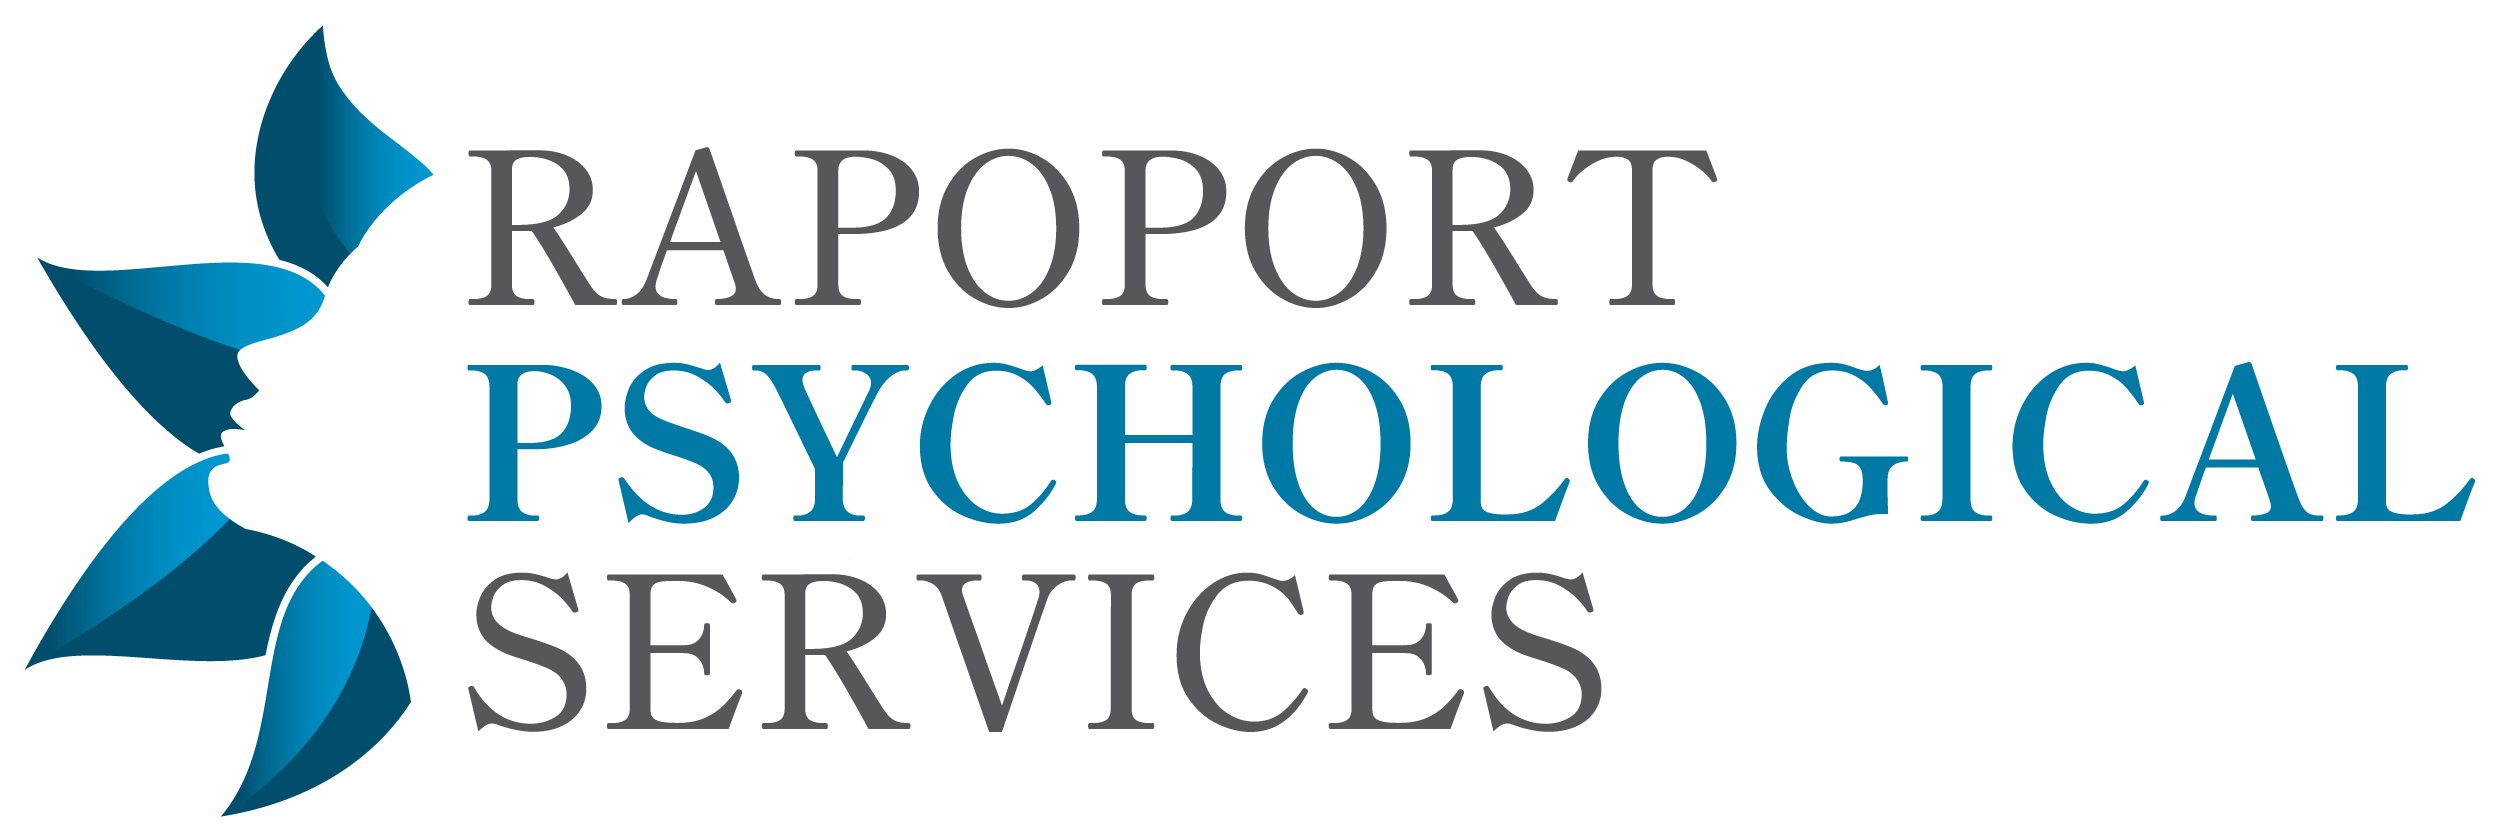 Rapoport Psychological Services 2021